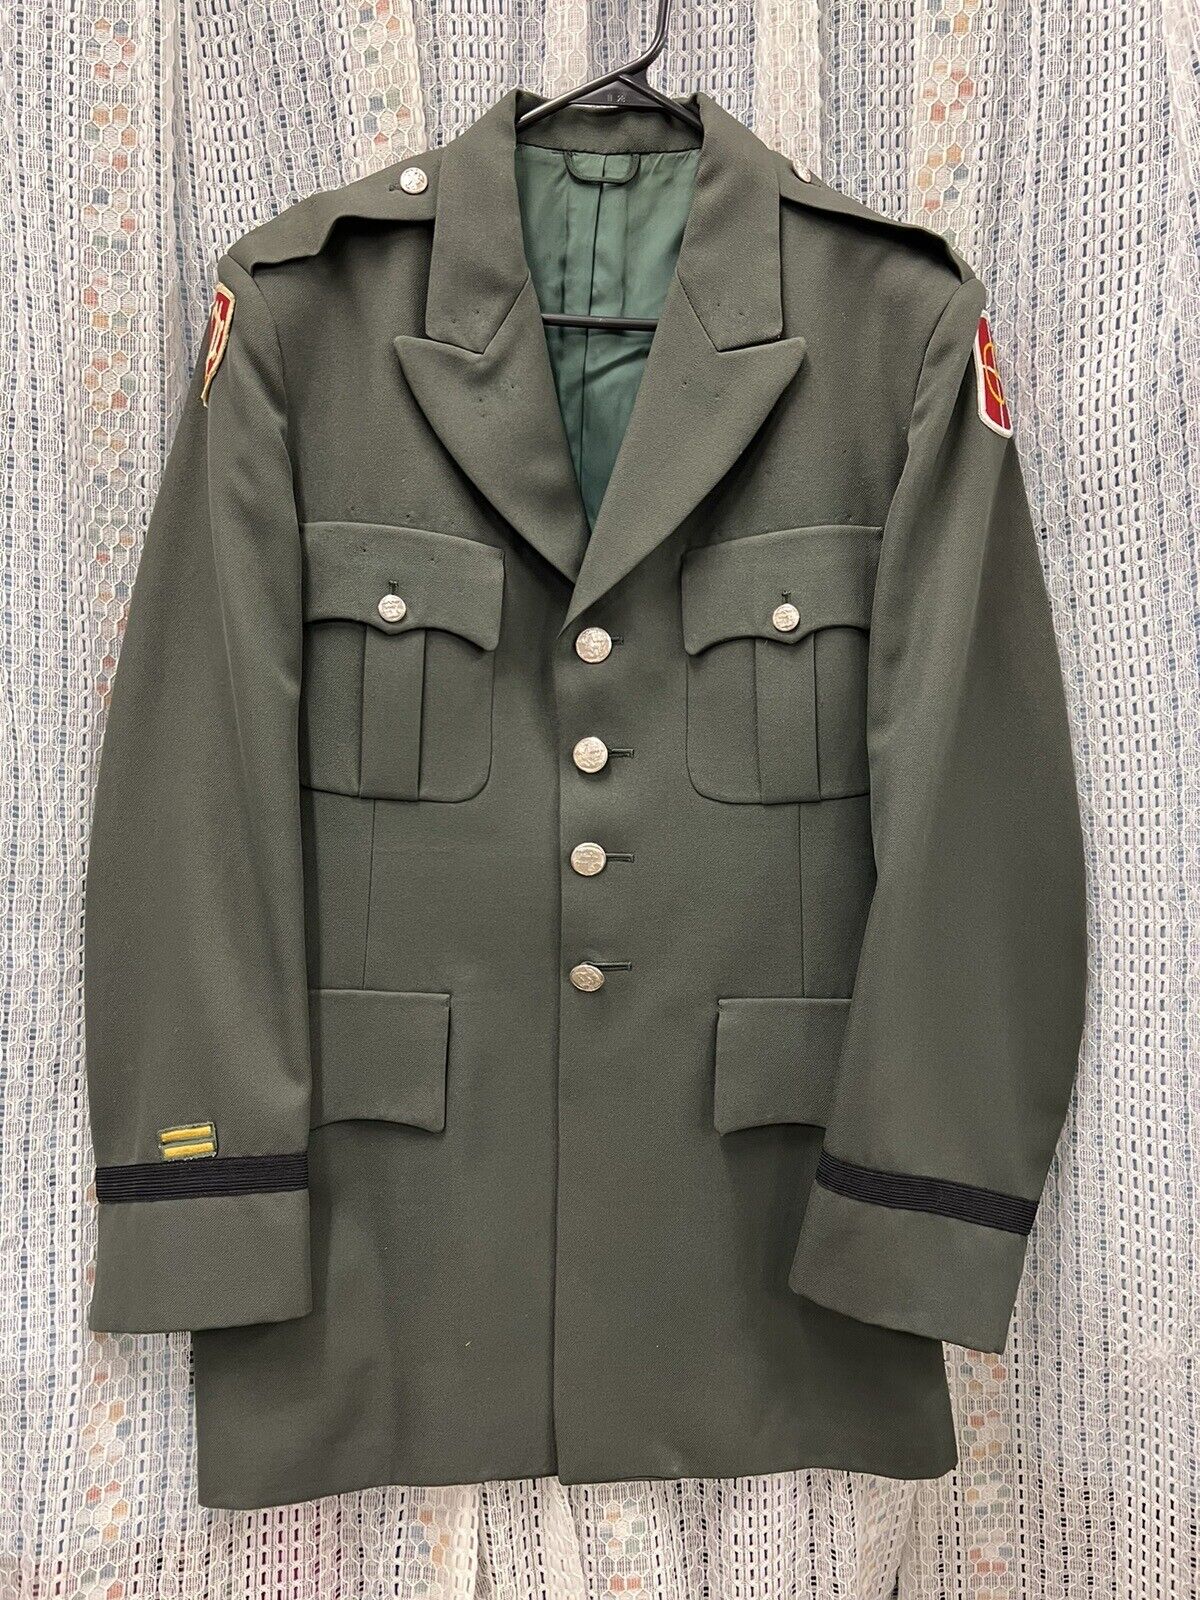 VIETNAM US Army Engineer Dress Uniform Green Jacket Pants Essayon Buttons Silvr